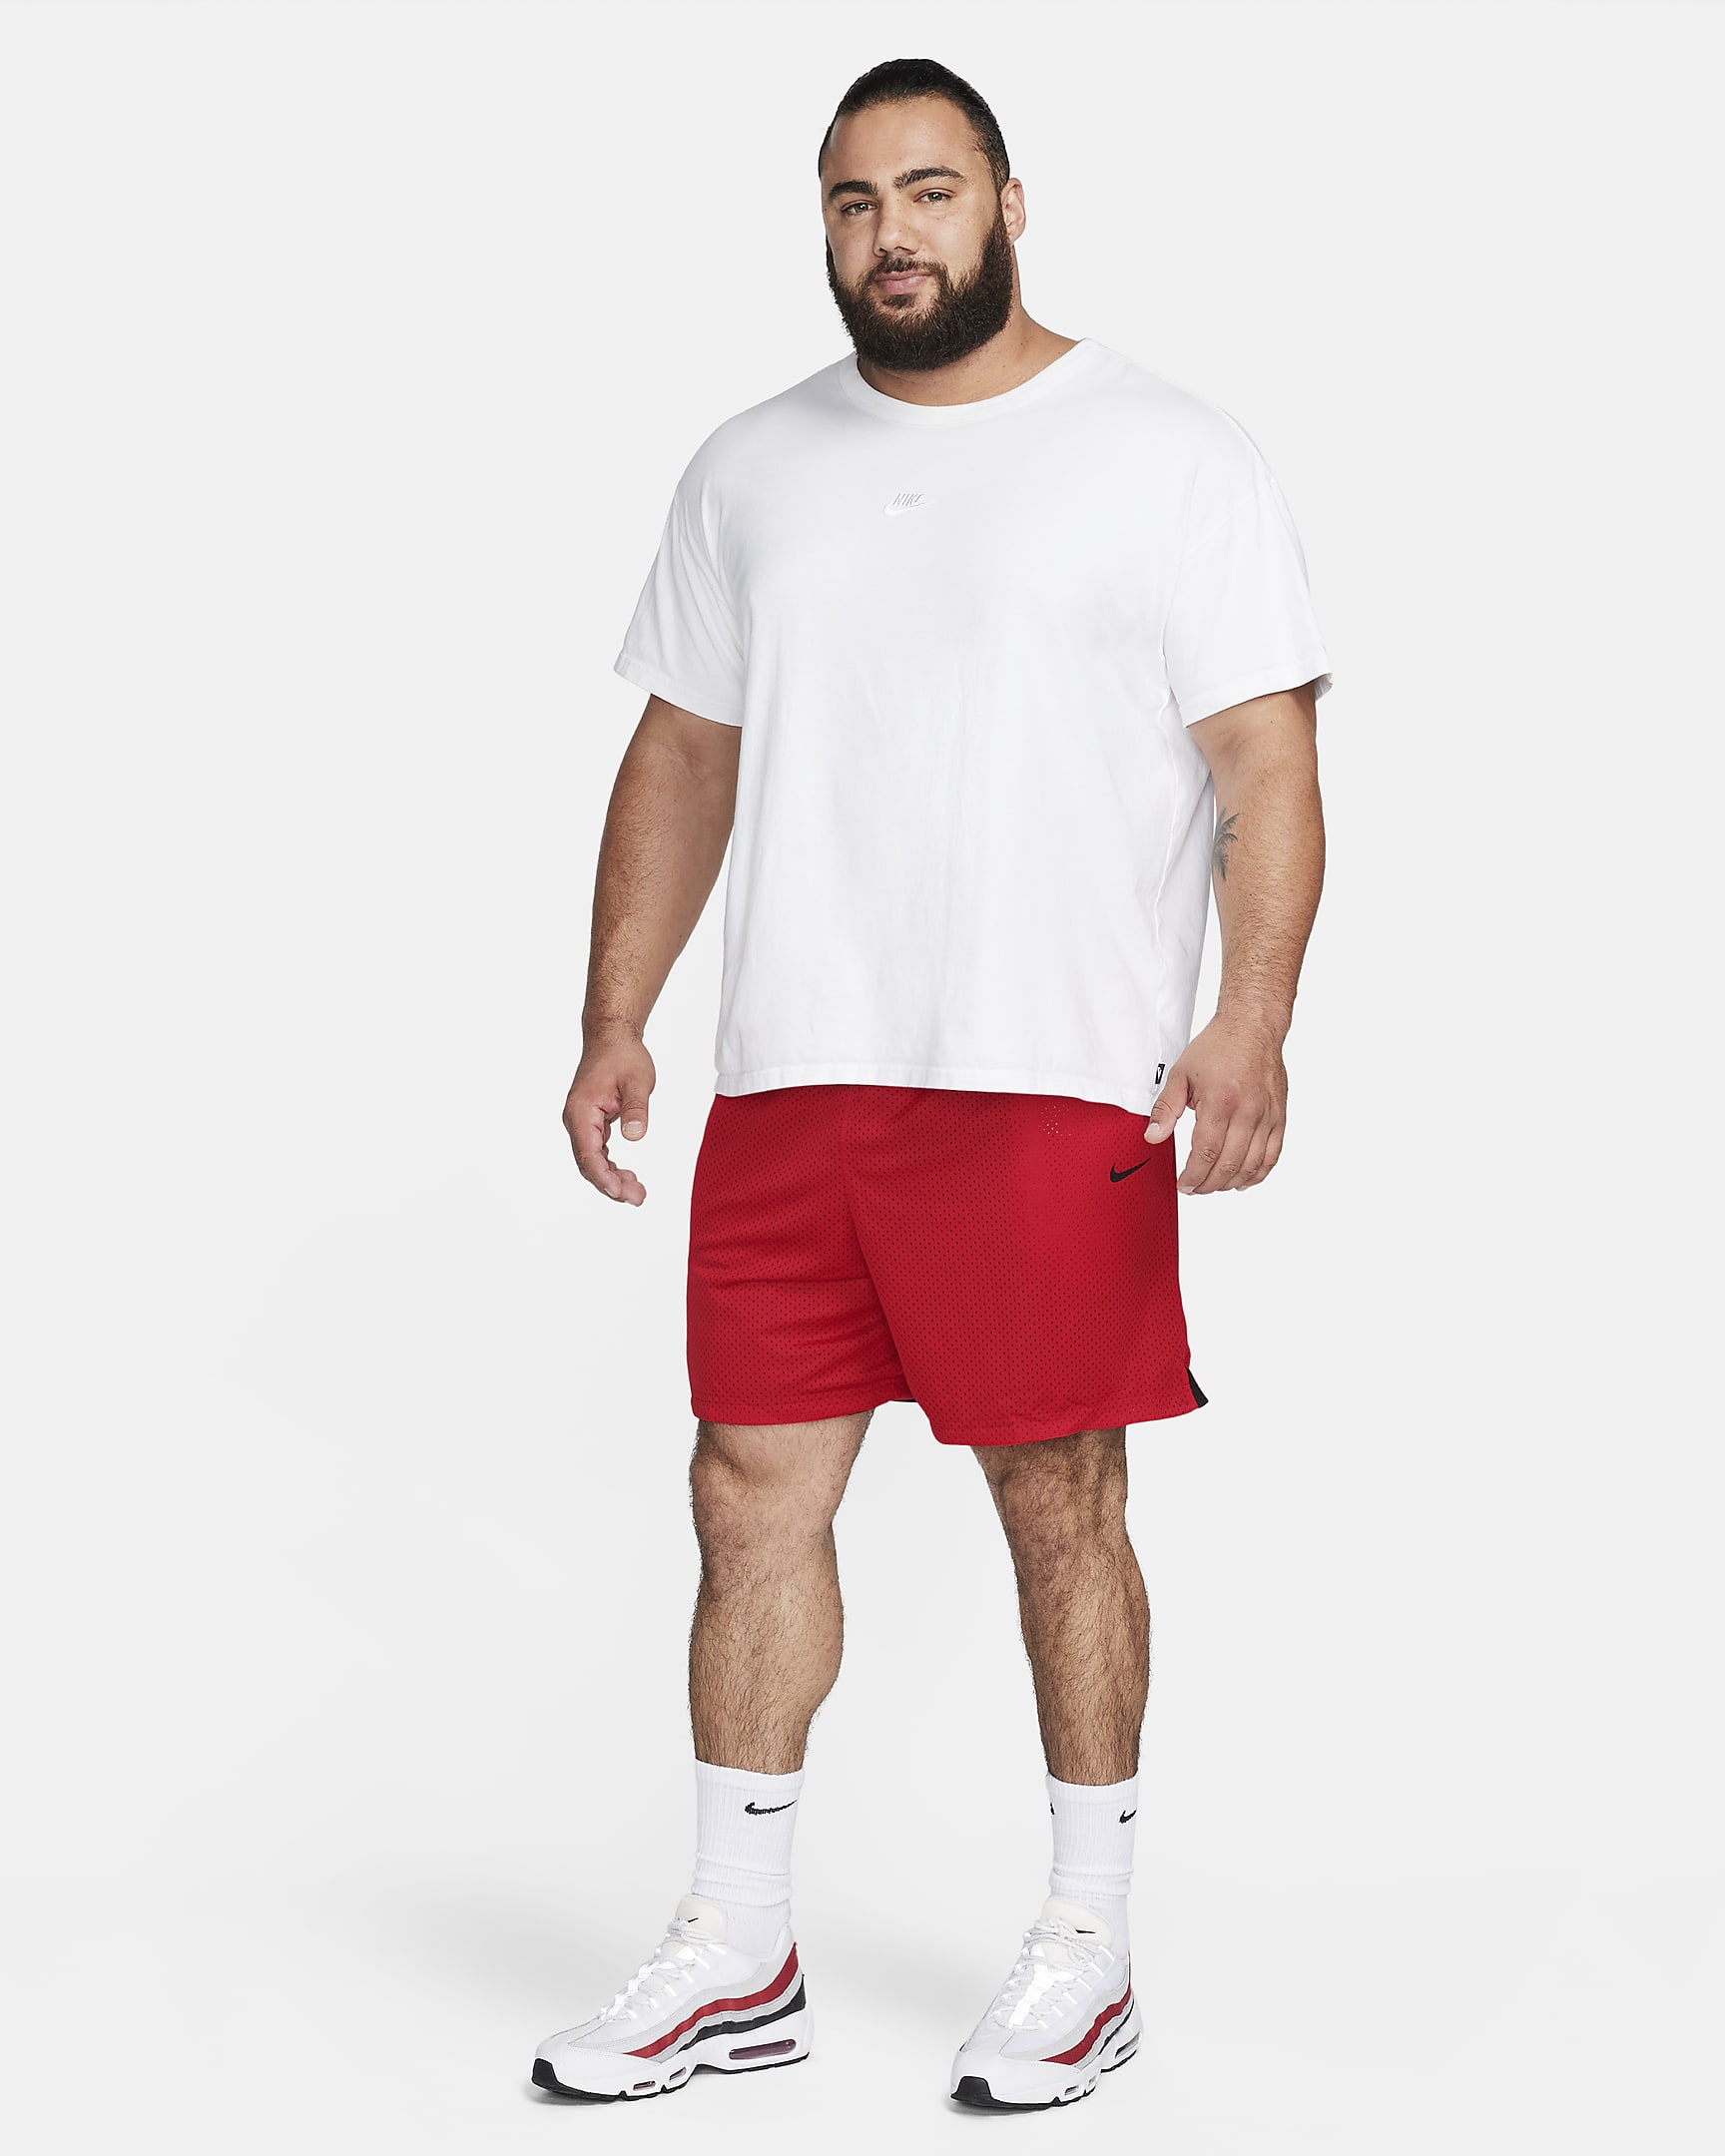 Nike Authentics Men's Practice Shorts. Nike.com